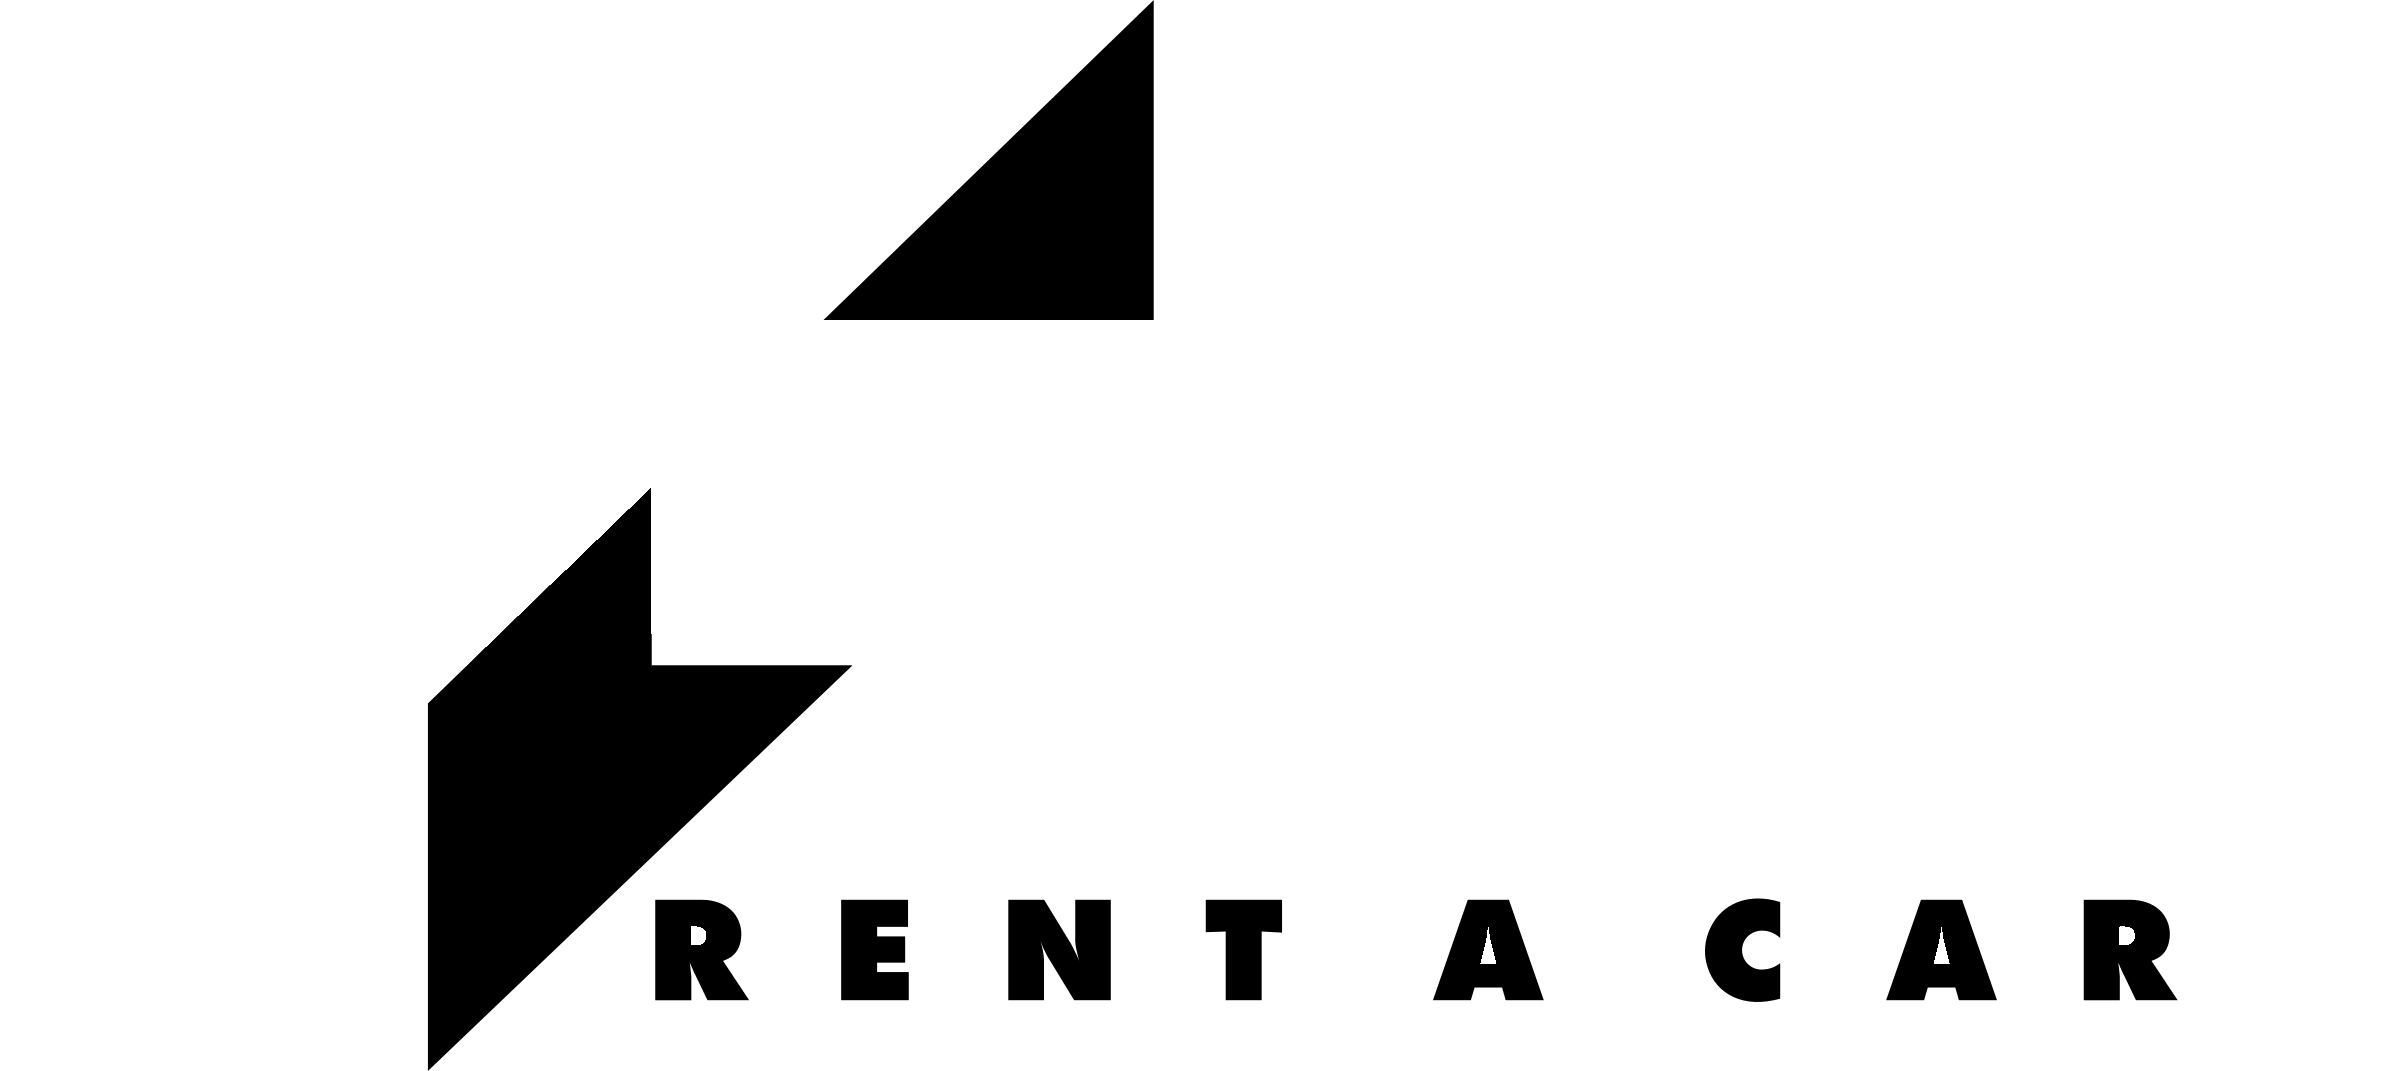 Dollar Rent a Car Logo - Dollar Rent A Car Logo PNG Transparent & SVG Vector - Freebie Supply